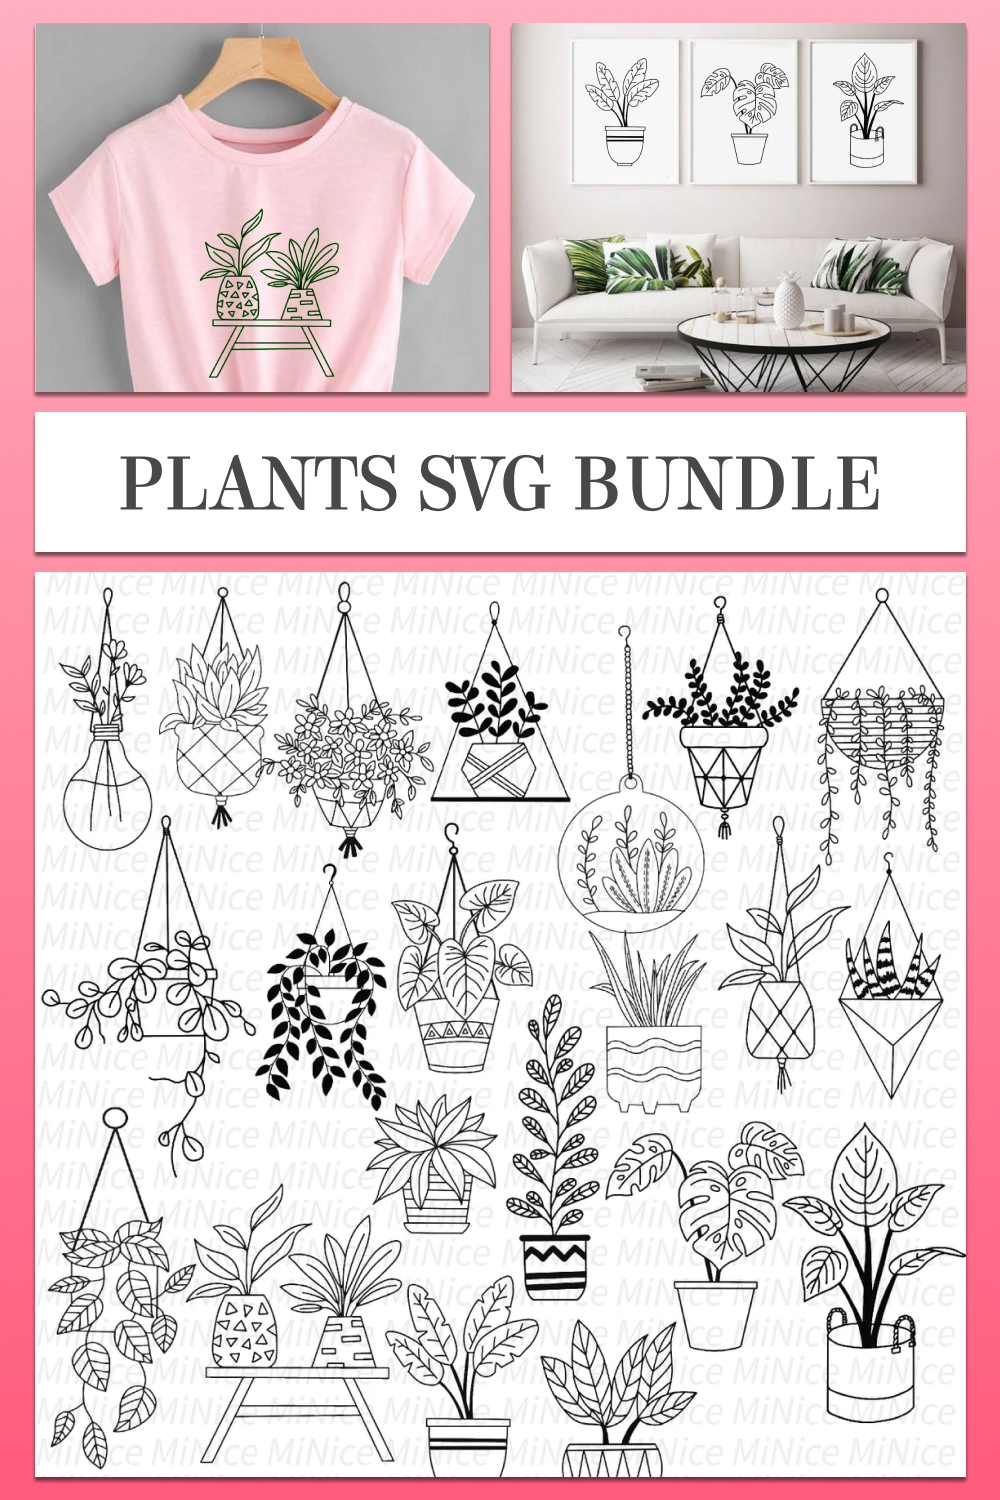 Plants svg bundle prints of pinterest